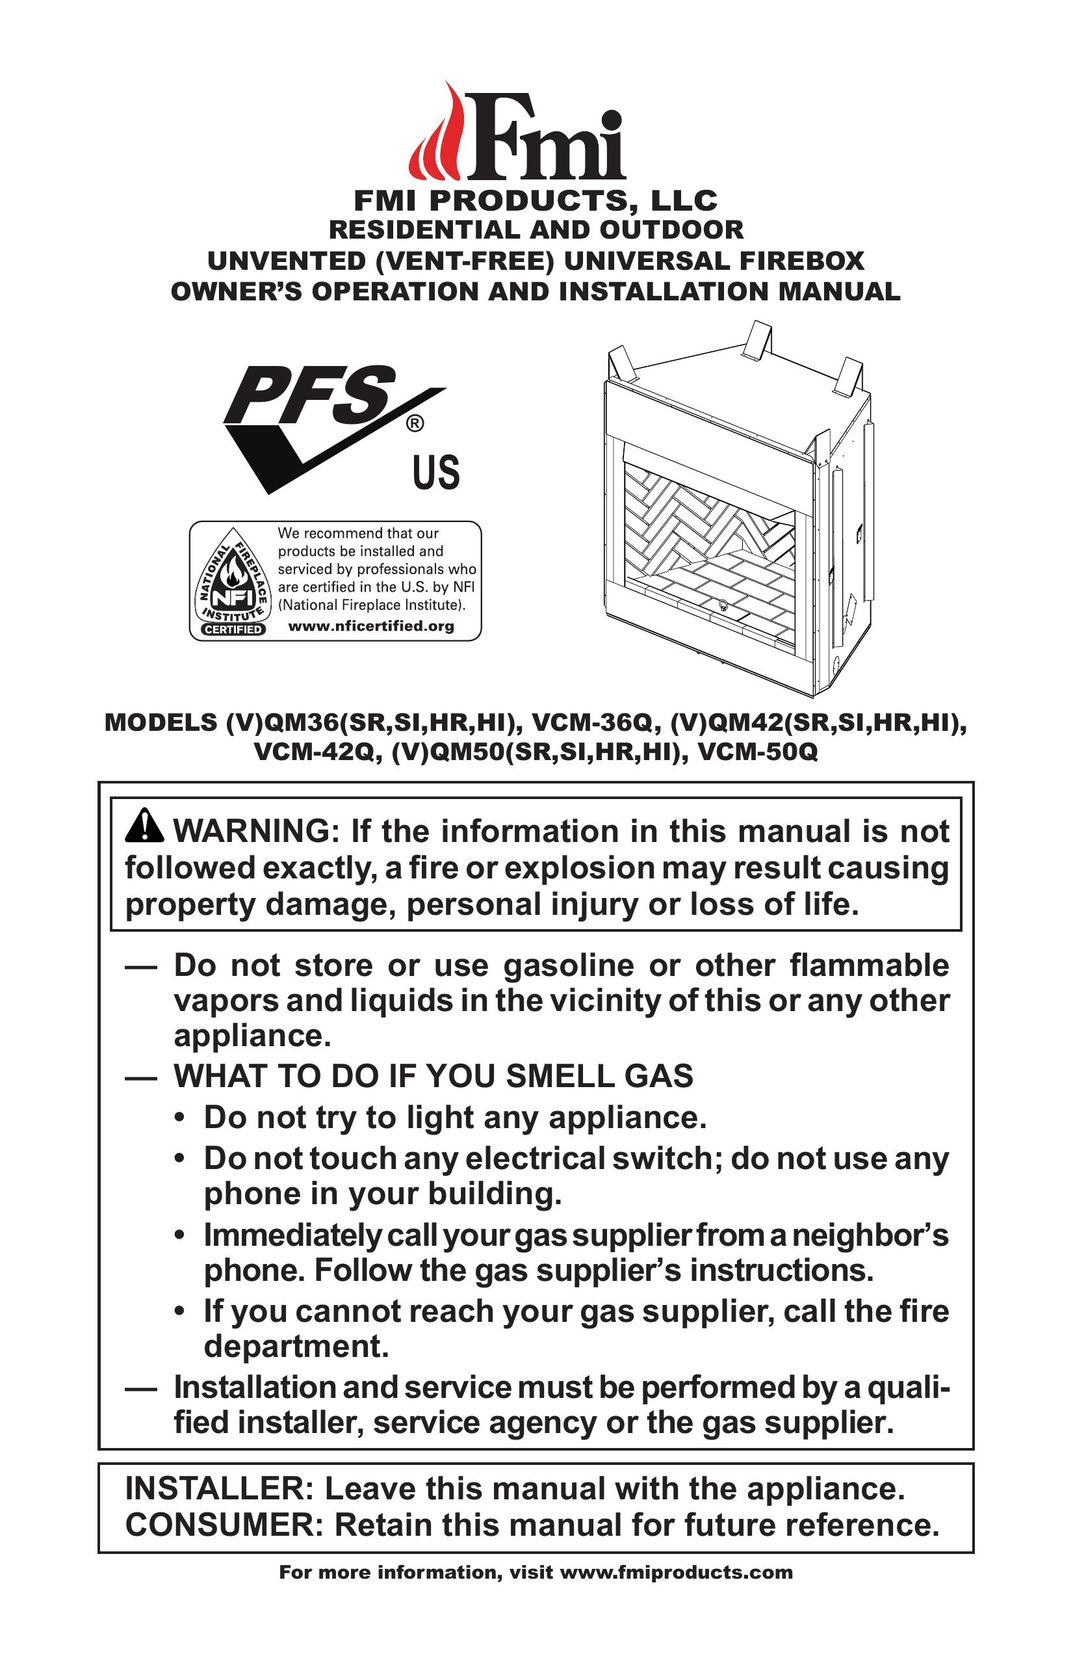 FMI (V)QM36(SR,SI,HR,HI) Indoor Fireplace User Manual